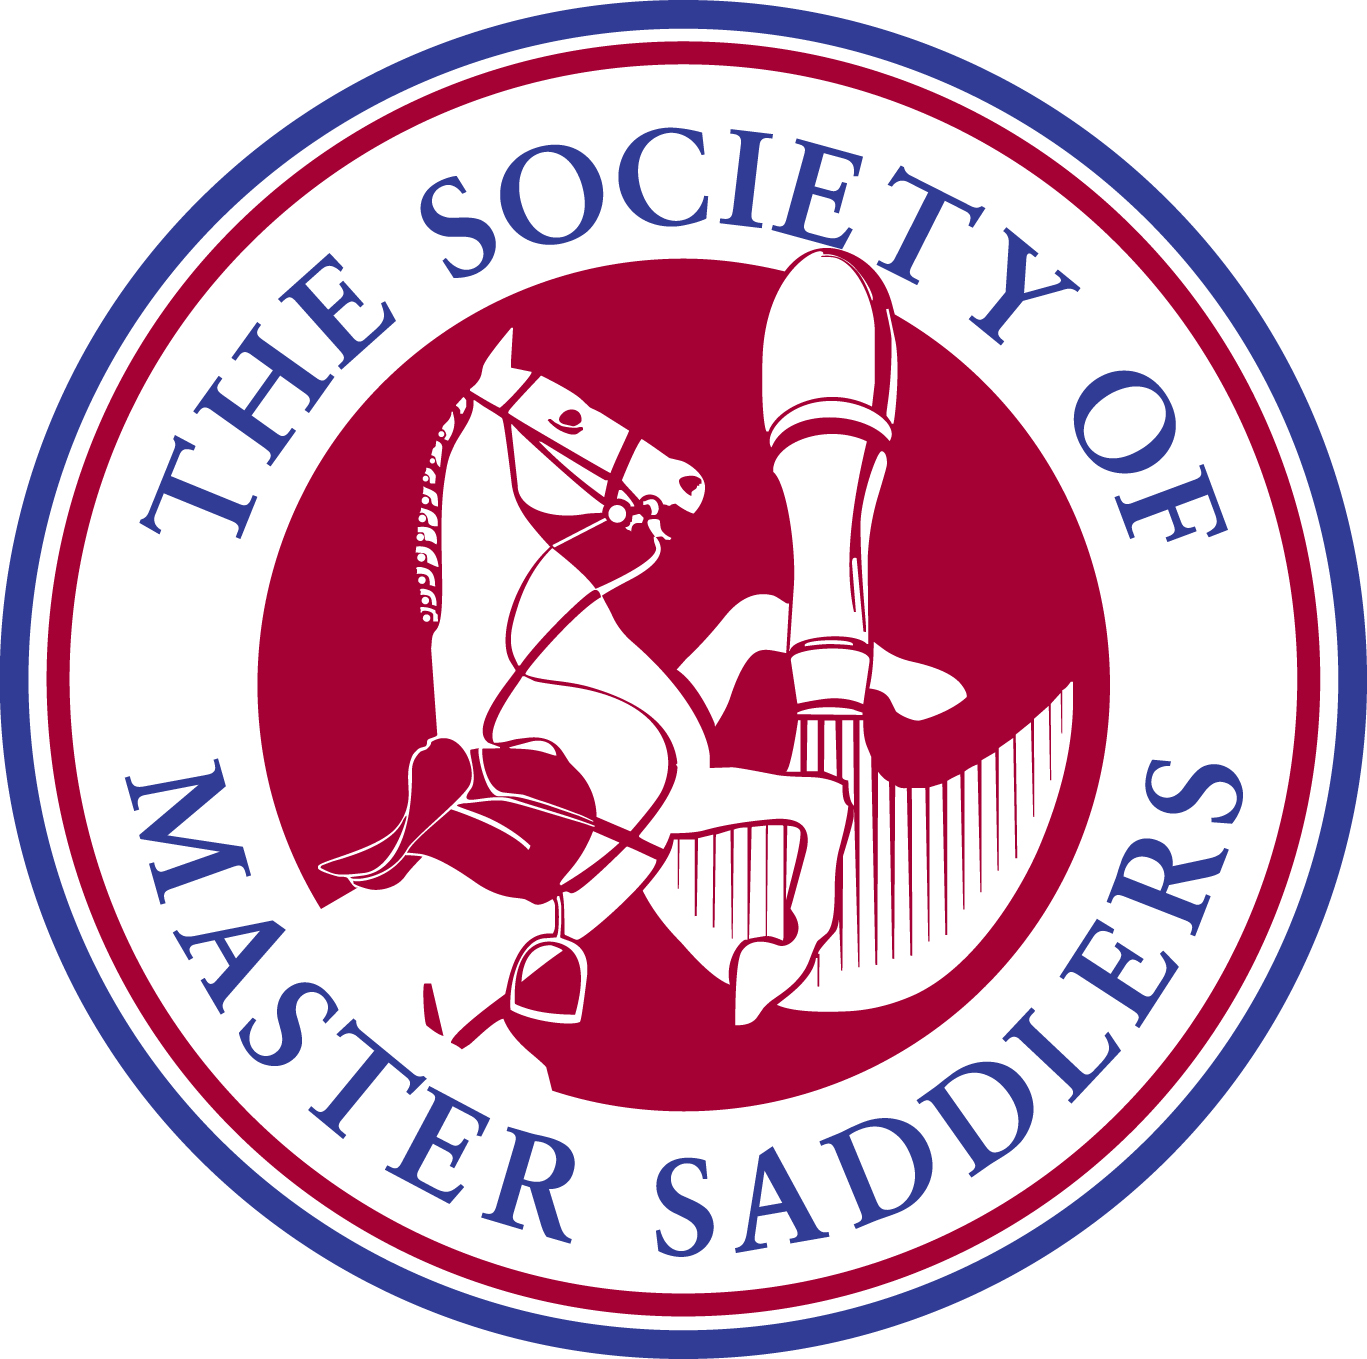 The Society Of Master Saddlers